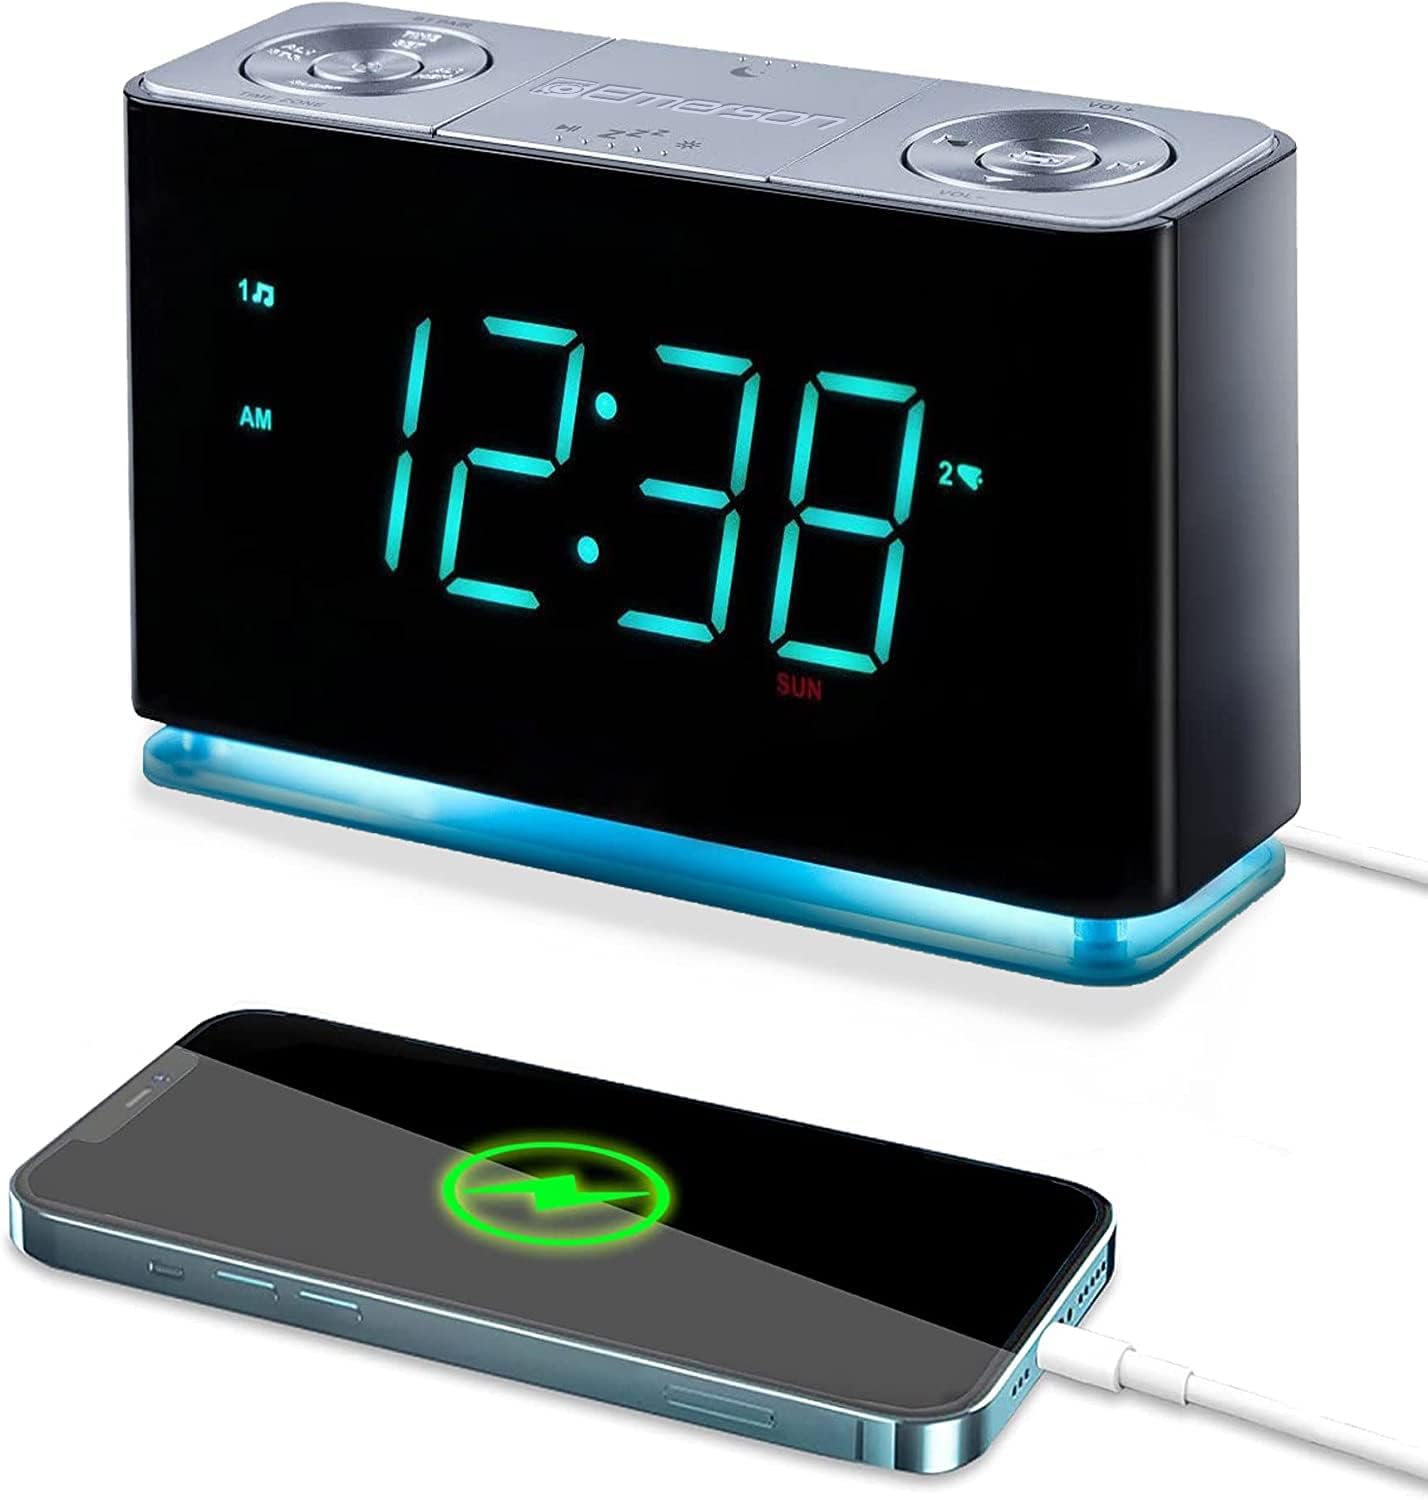 Emerson SmartSet Alarm Clock Radio with Bluetooth [...]